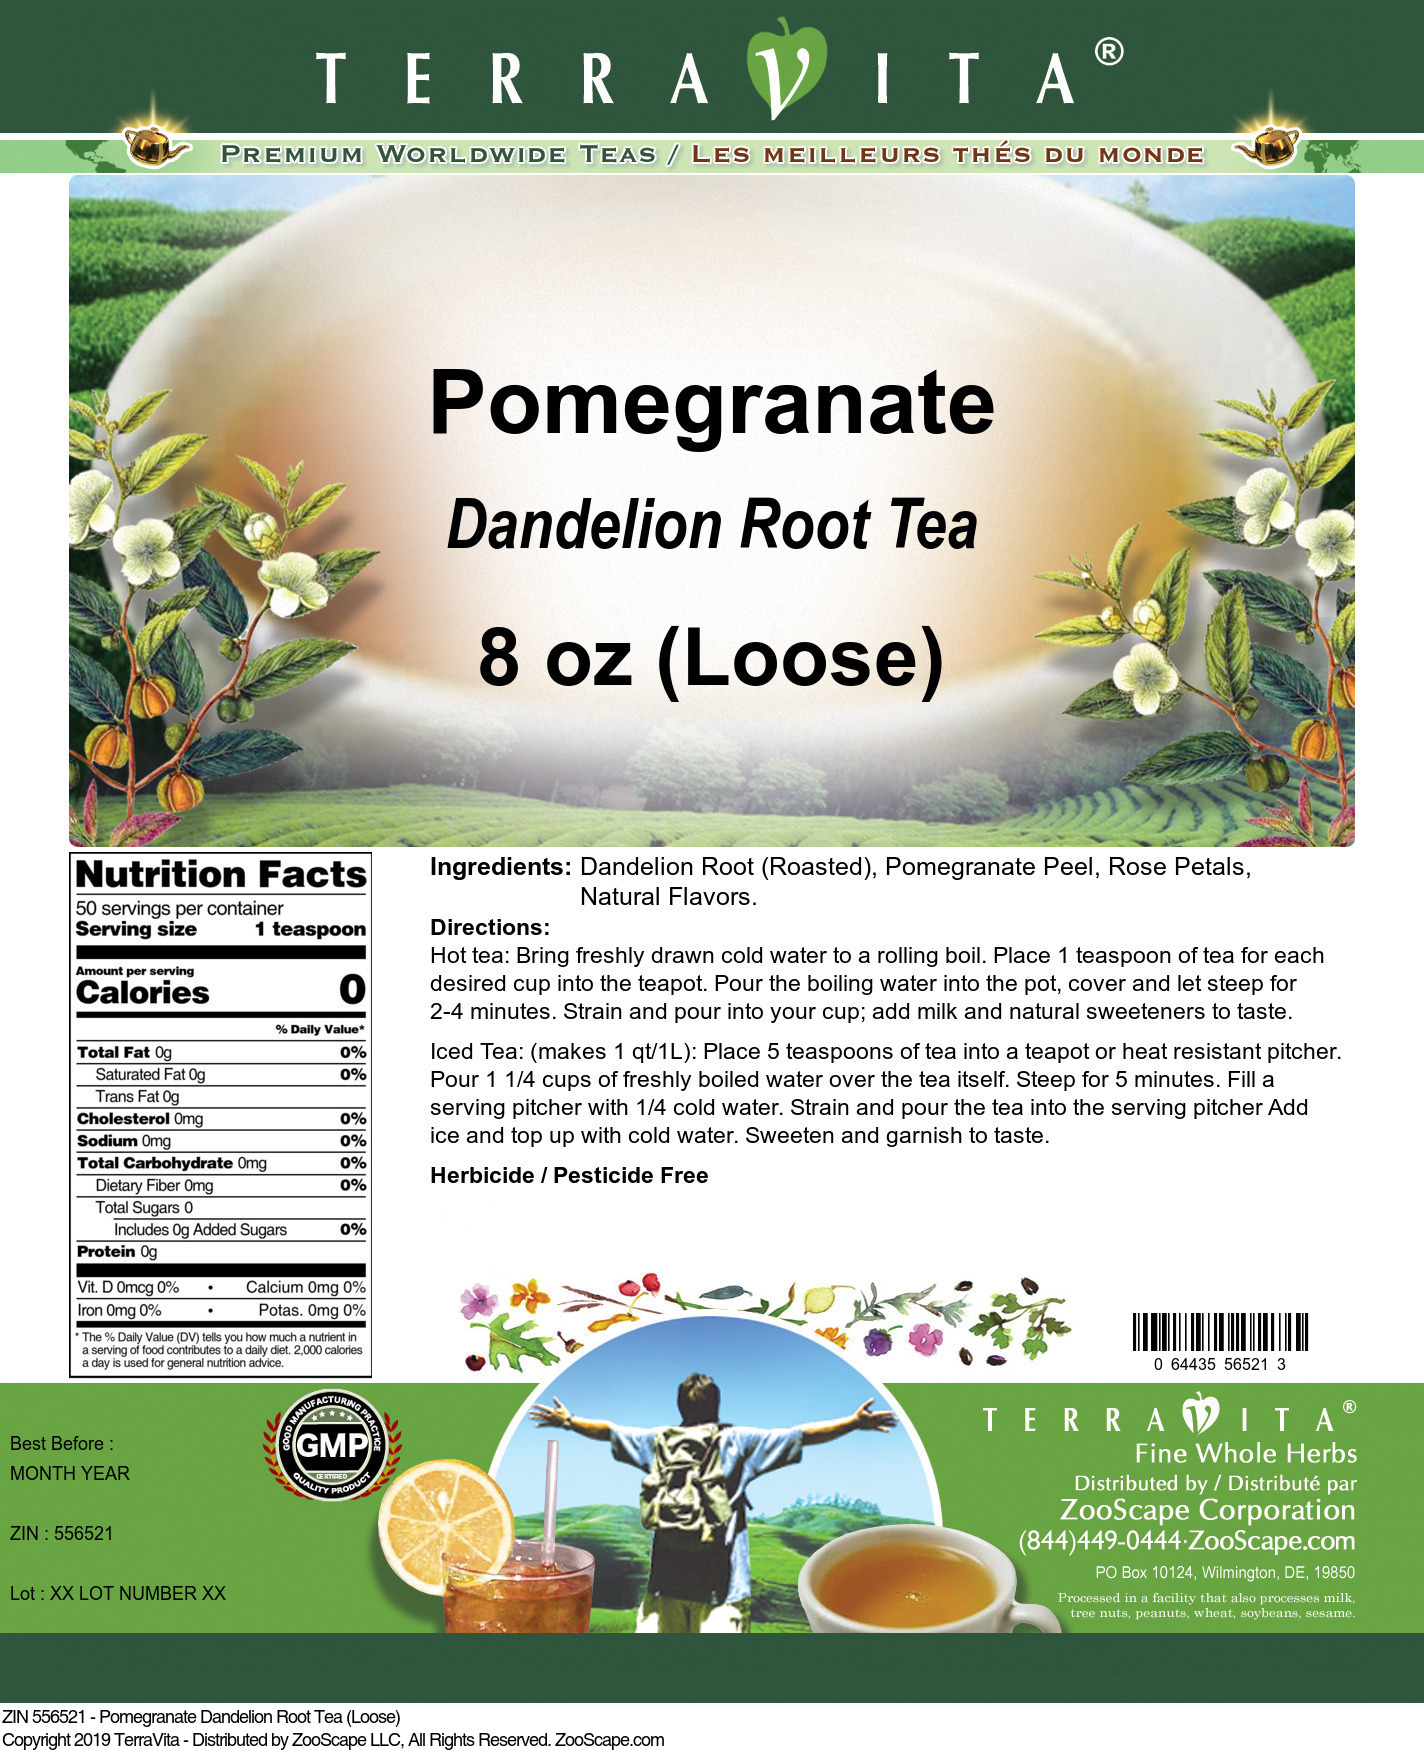 Pomegranate Dandelion Root Tea (Loose) - Label